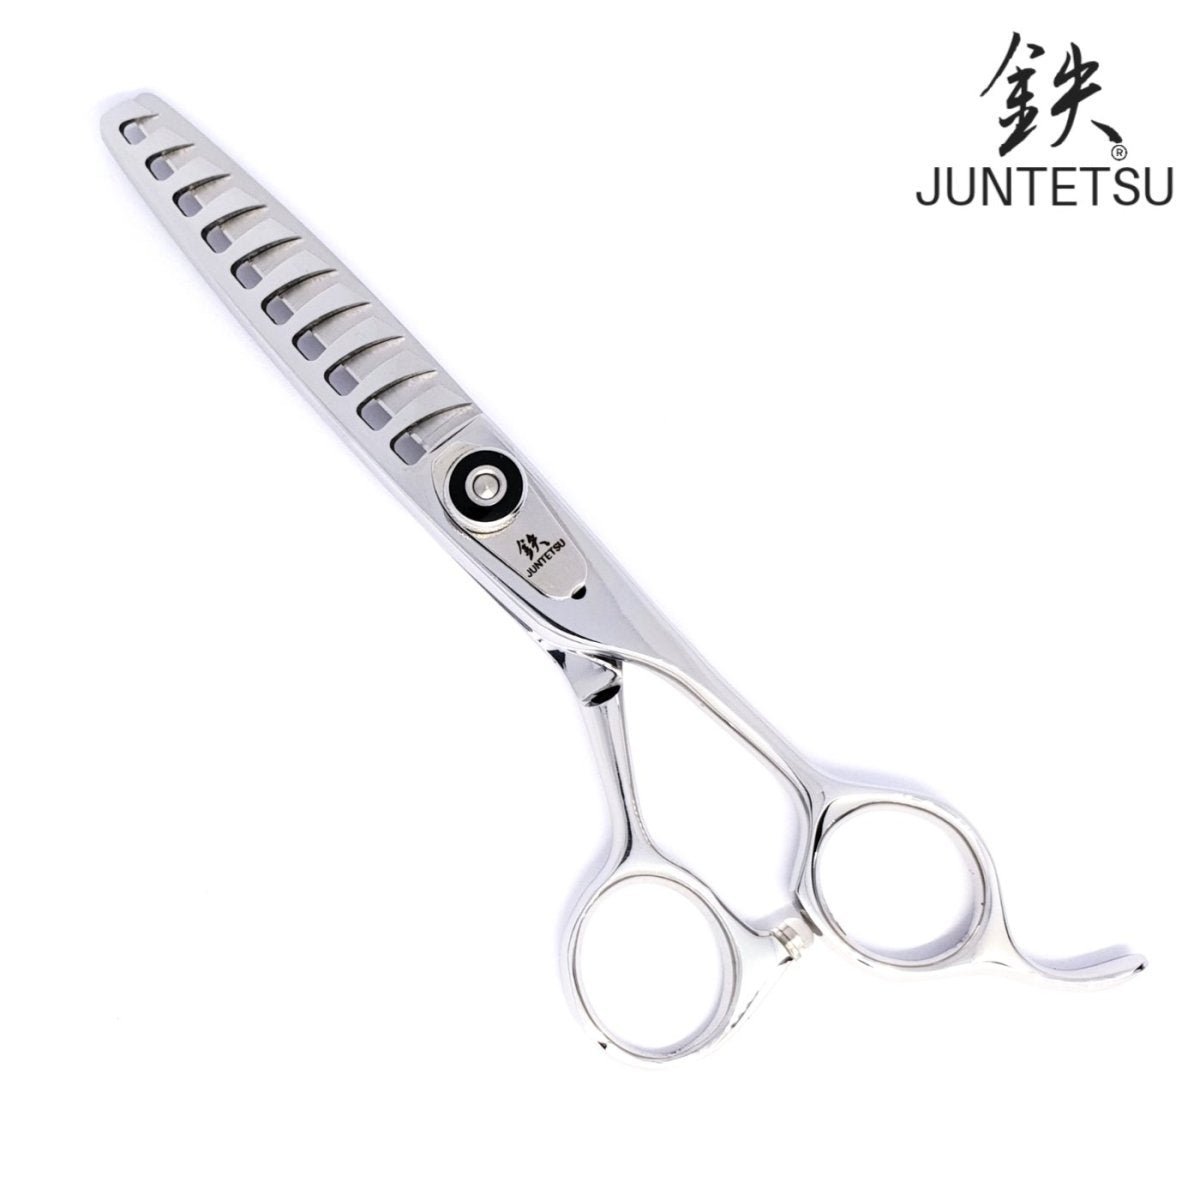 Juntetsu Chomper Thinning Shears - Japan Scissors USA